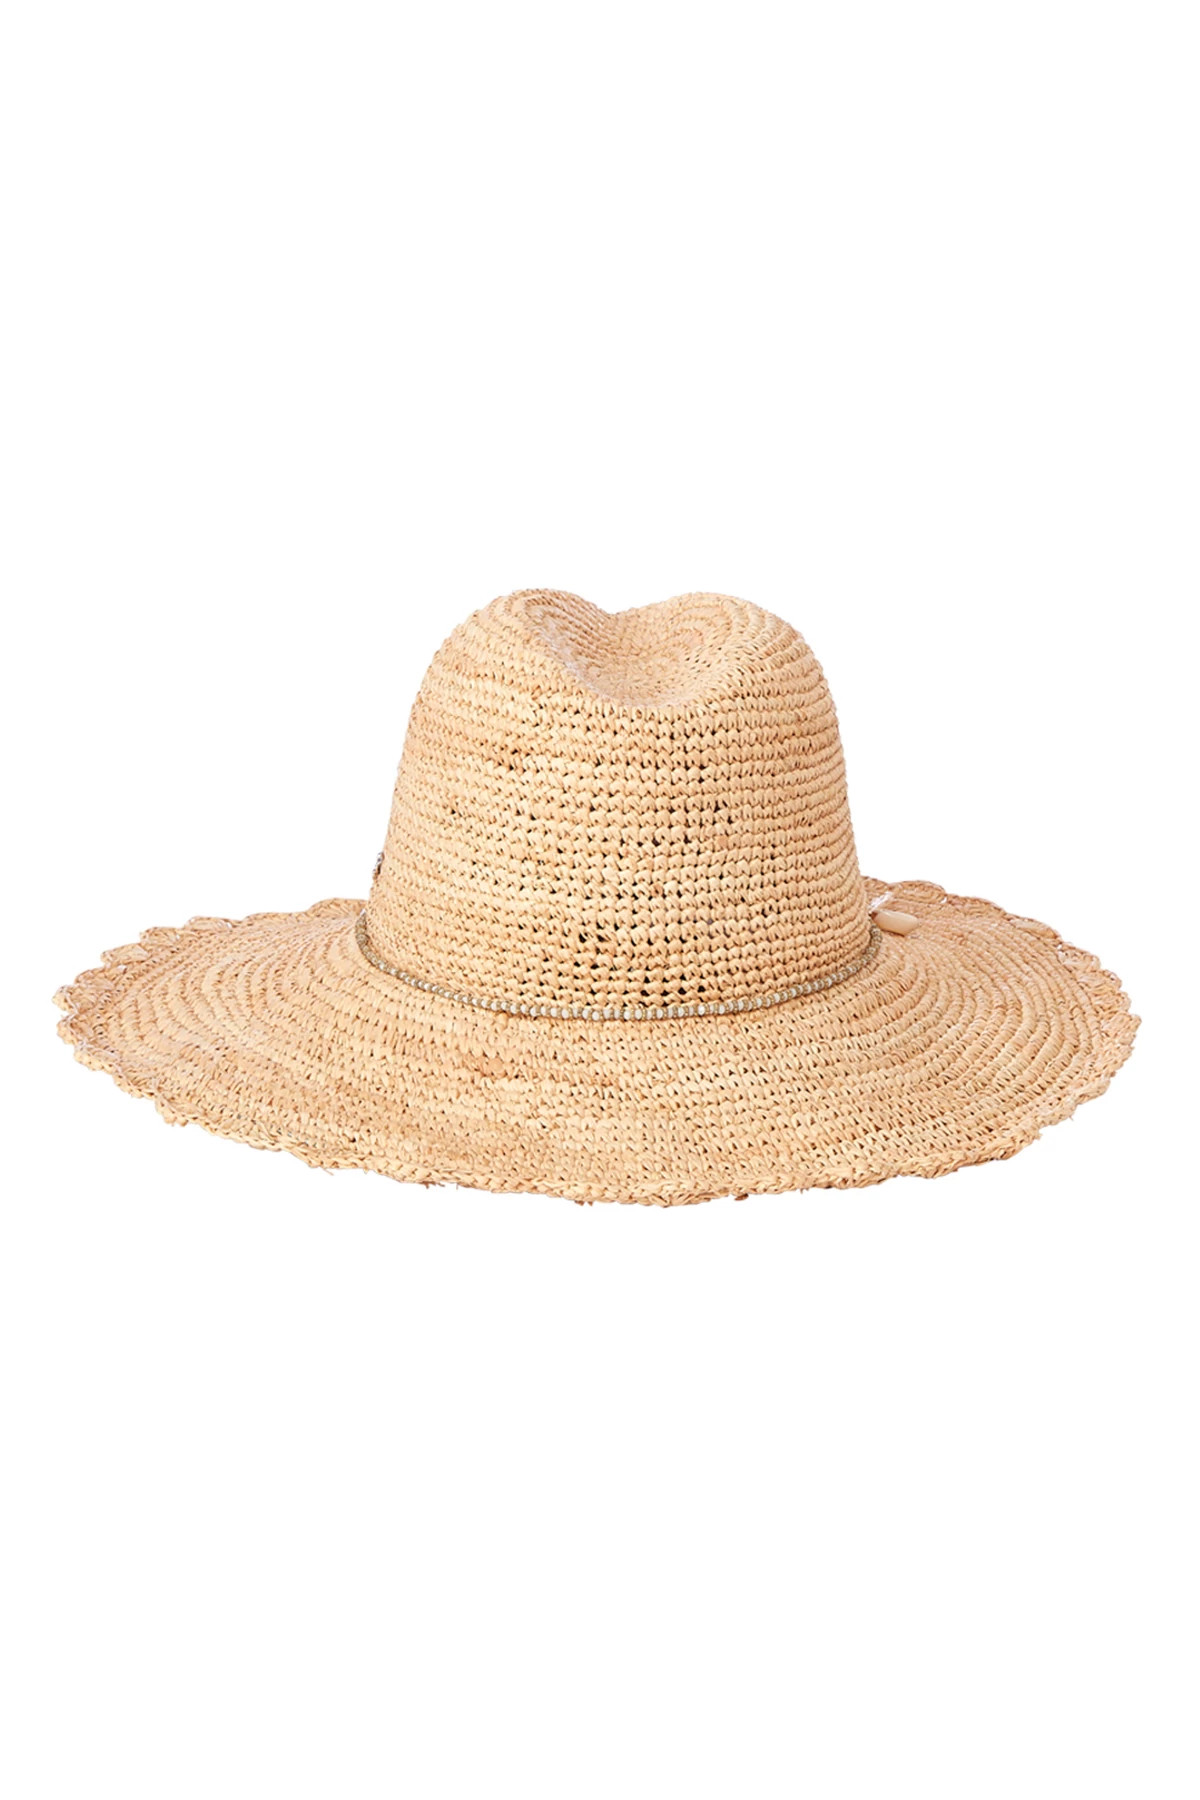 NATURAL Adelee Panama Hat image number 1